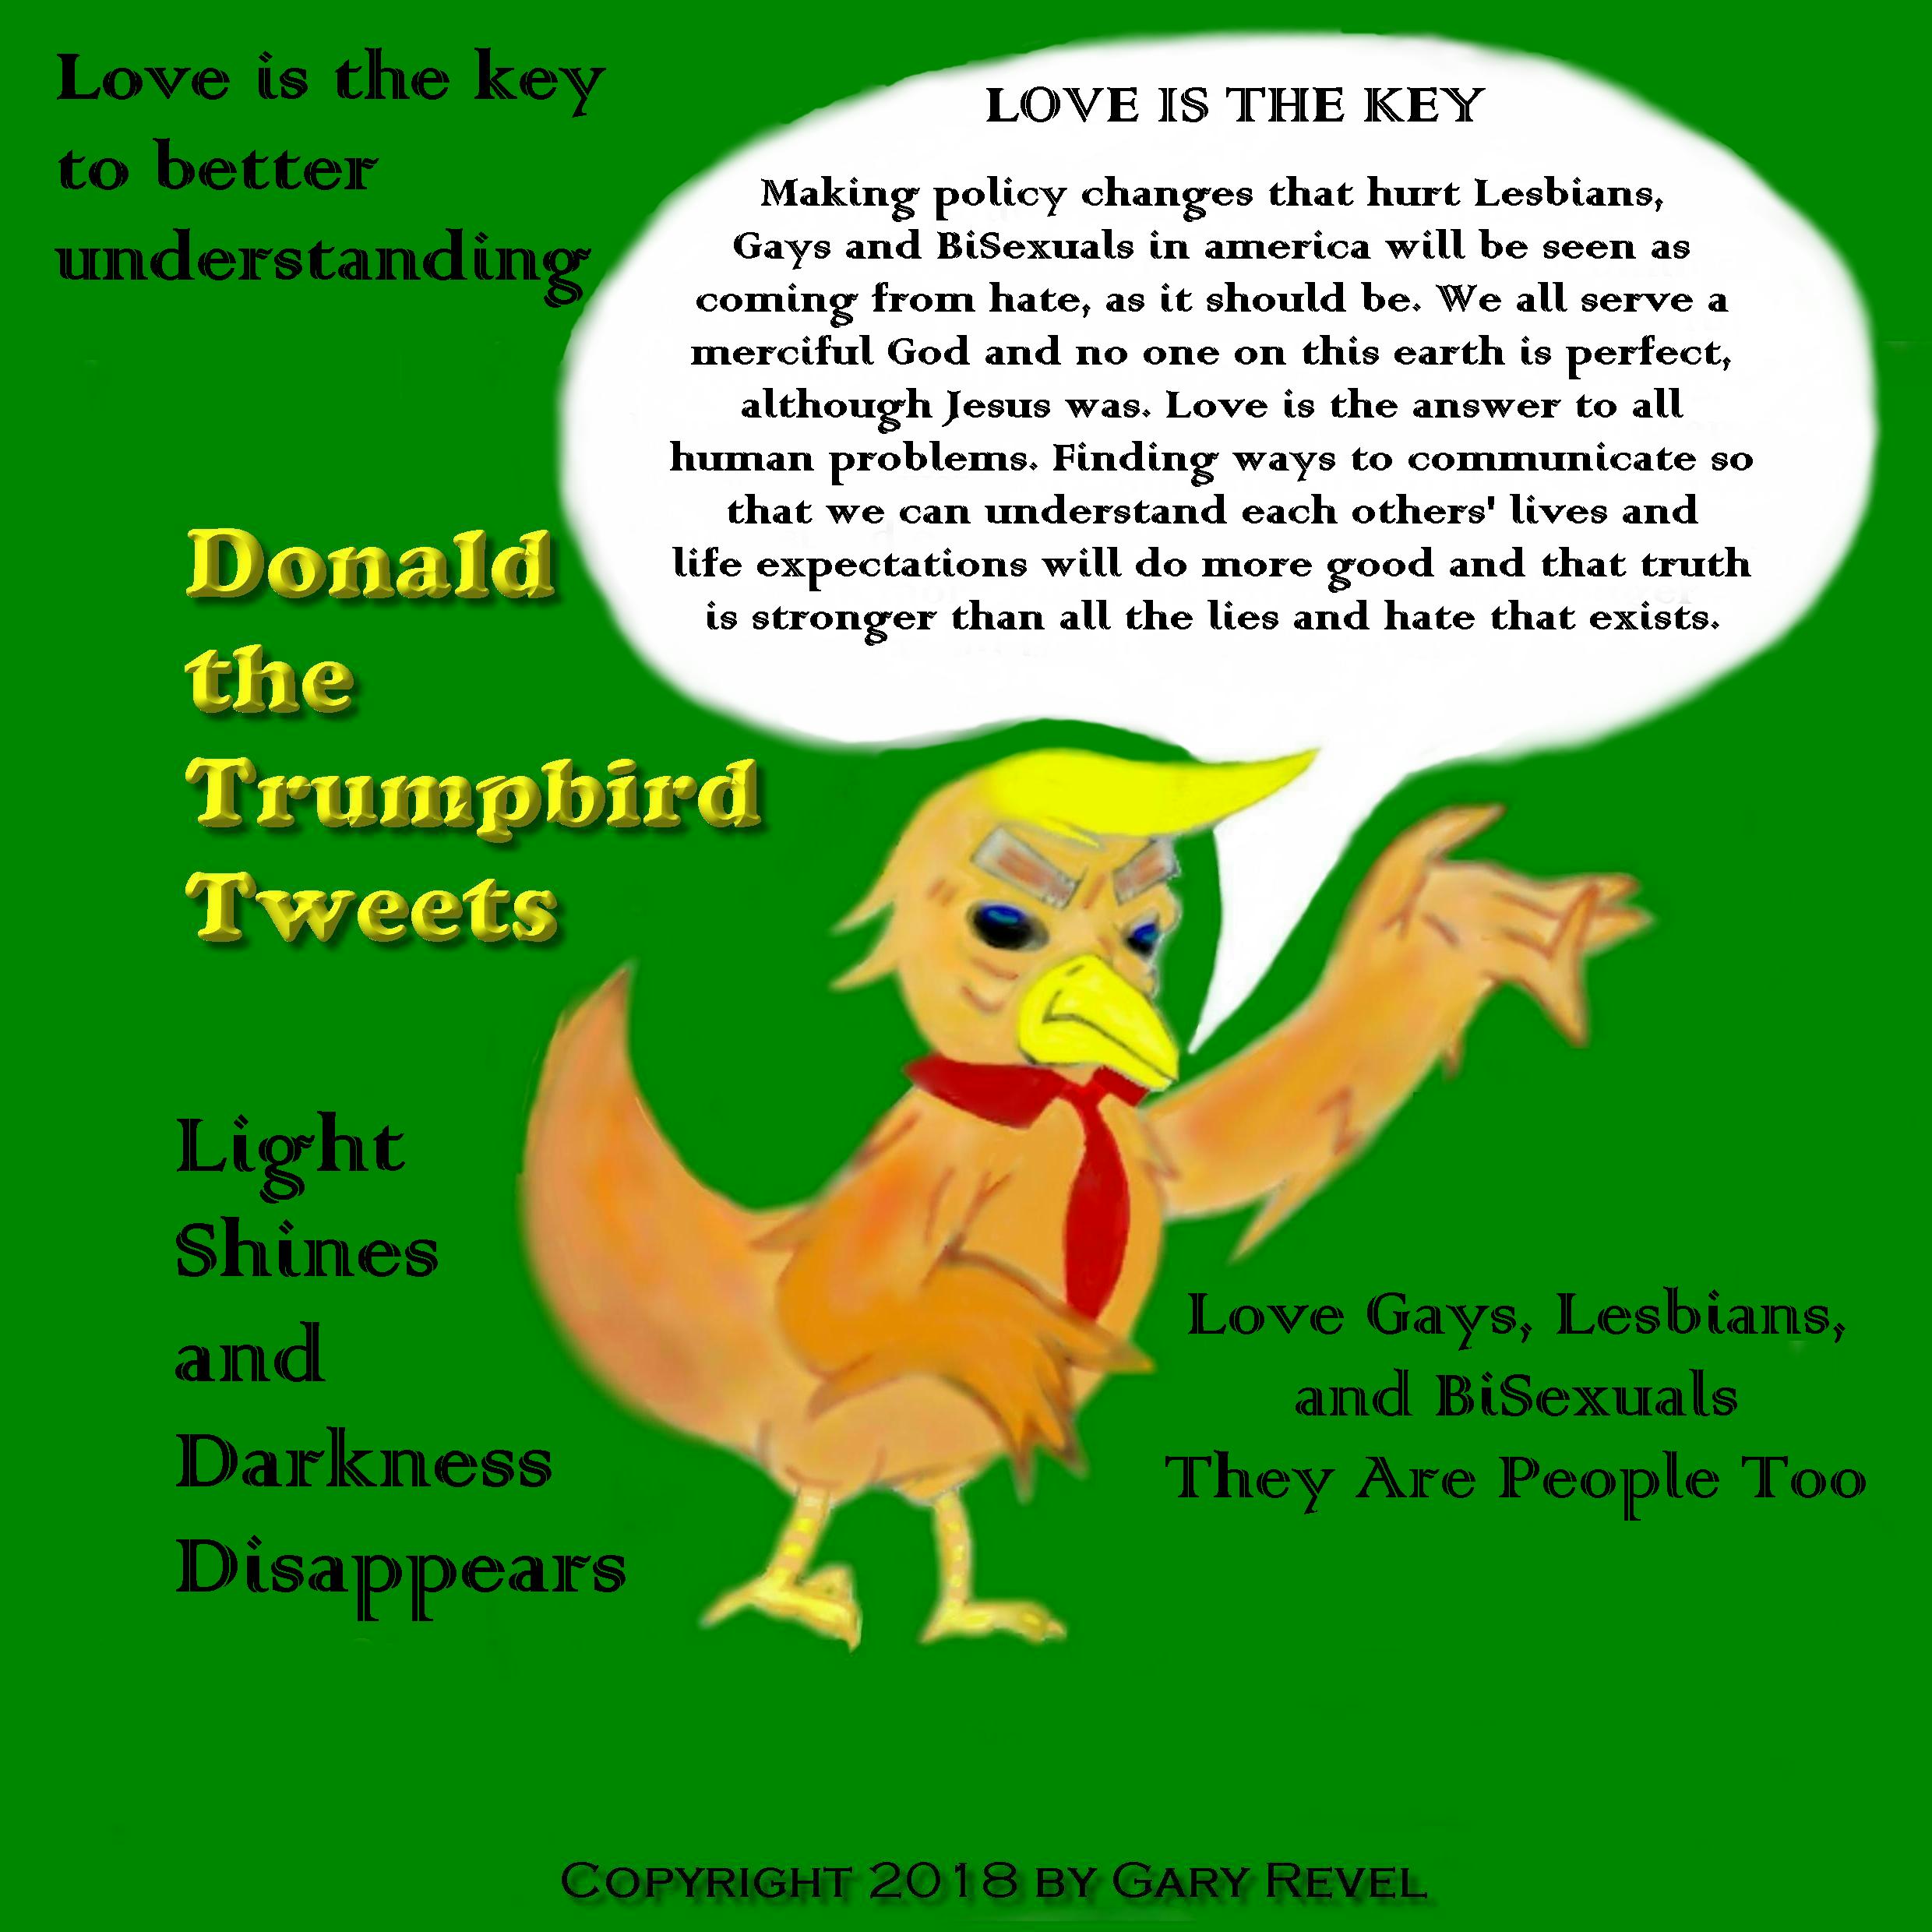 Donald the Trumpbird tweets love is the key